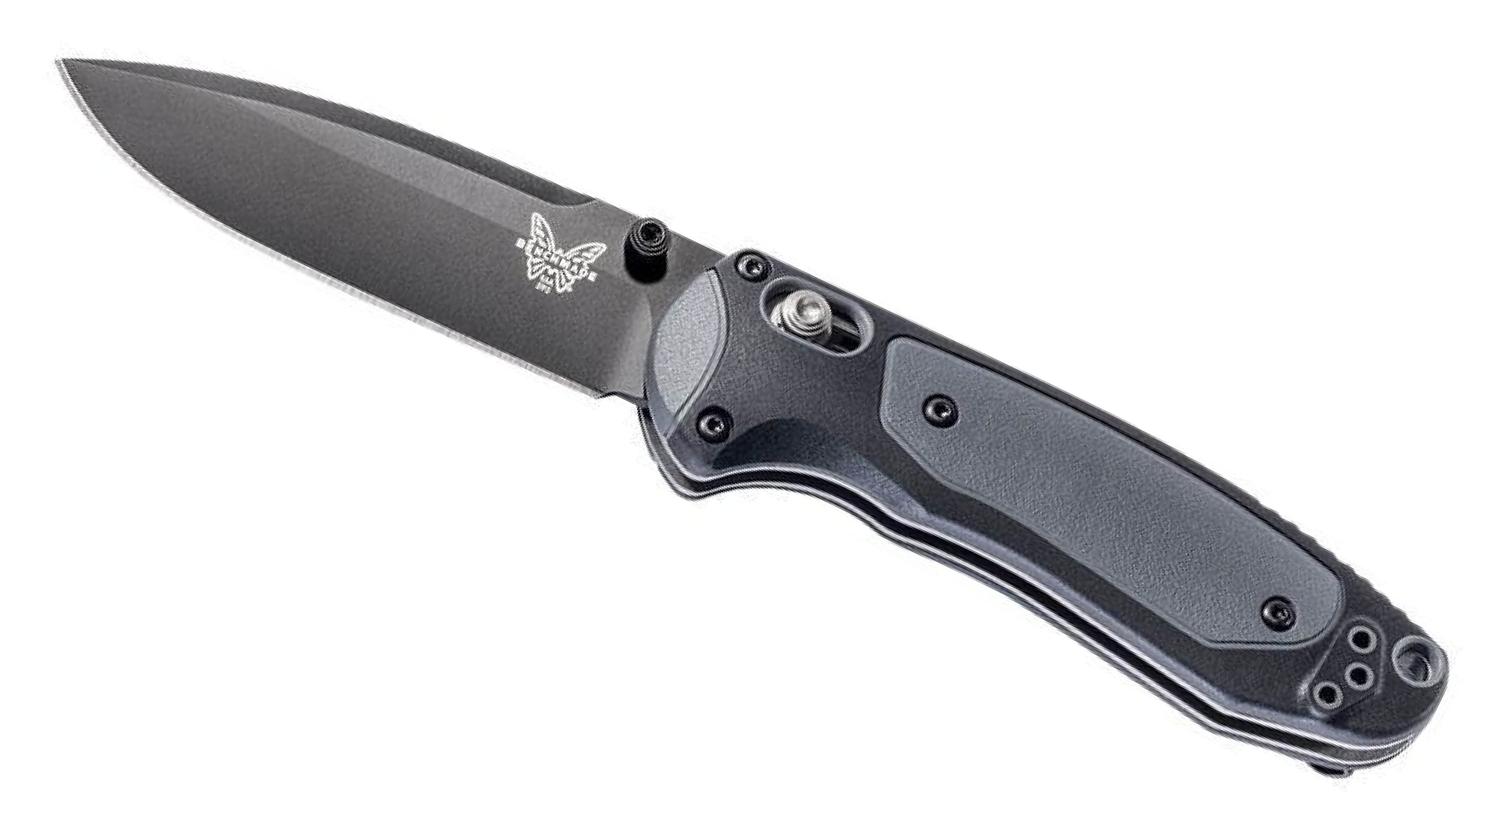  595 Mini Boost Assisted Folding Knife 3.11in S30v Black